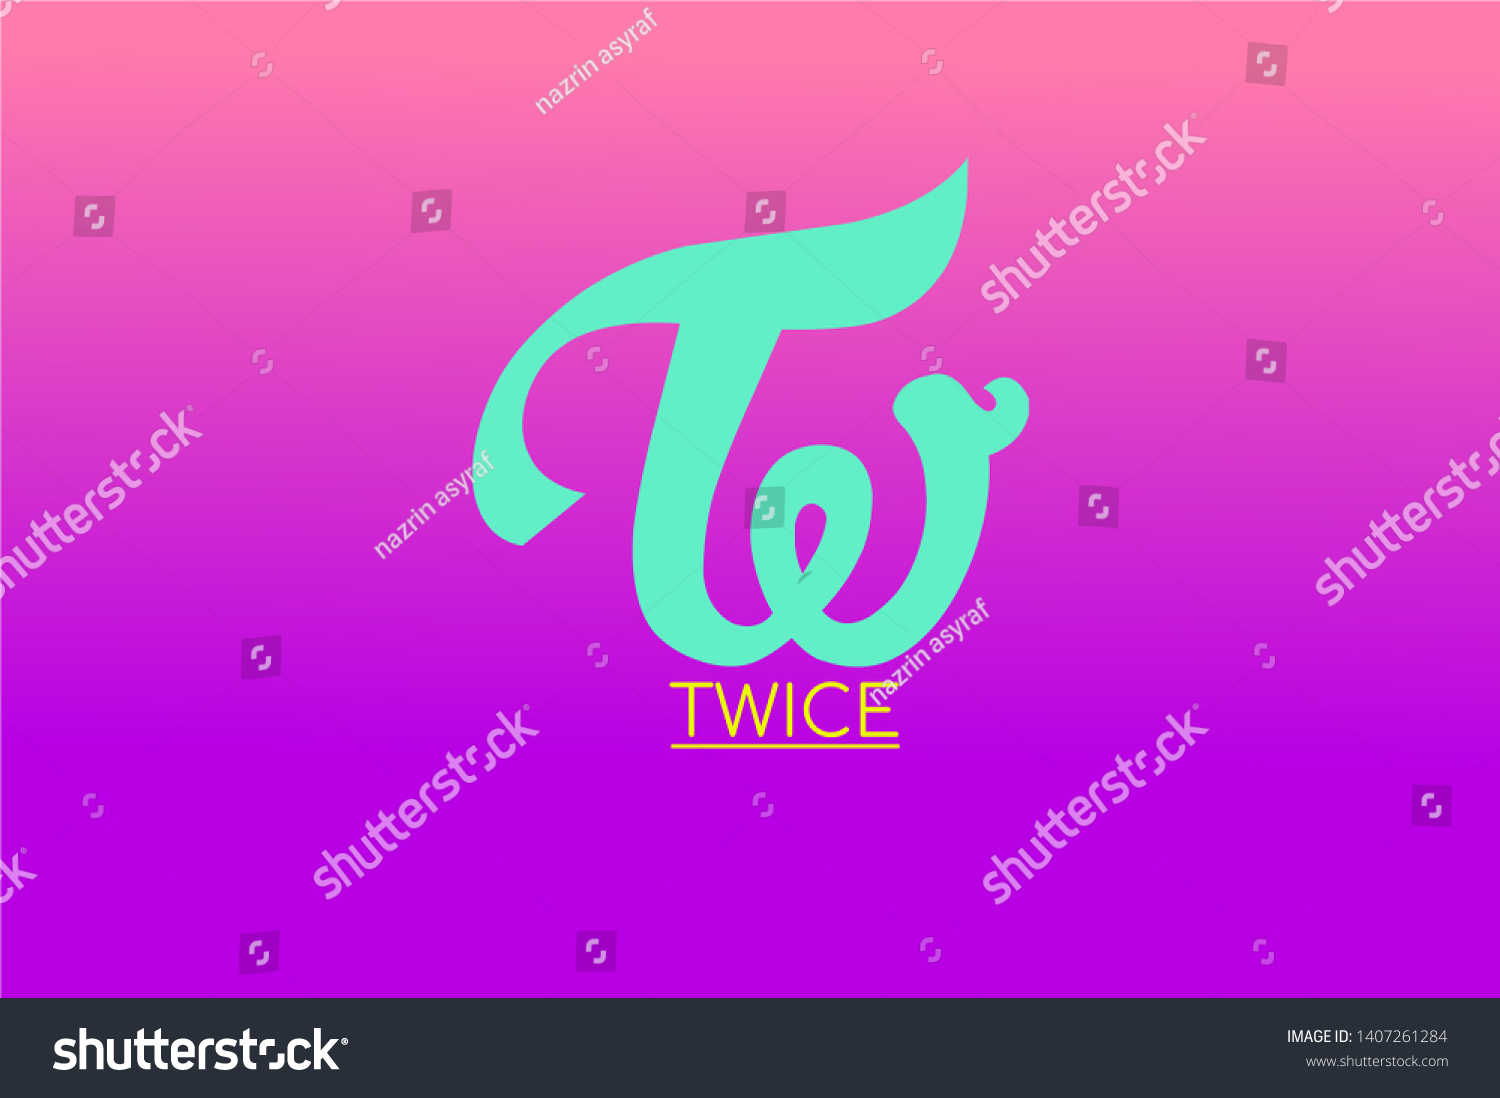 Twice Logo Kpop Background Wallpaper Stock Illustration